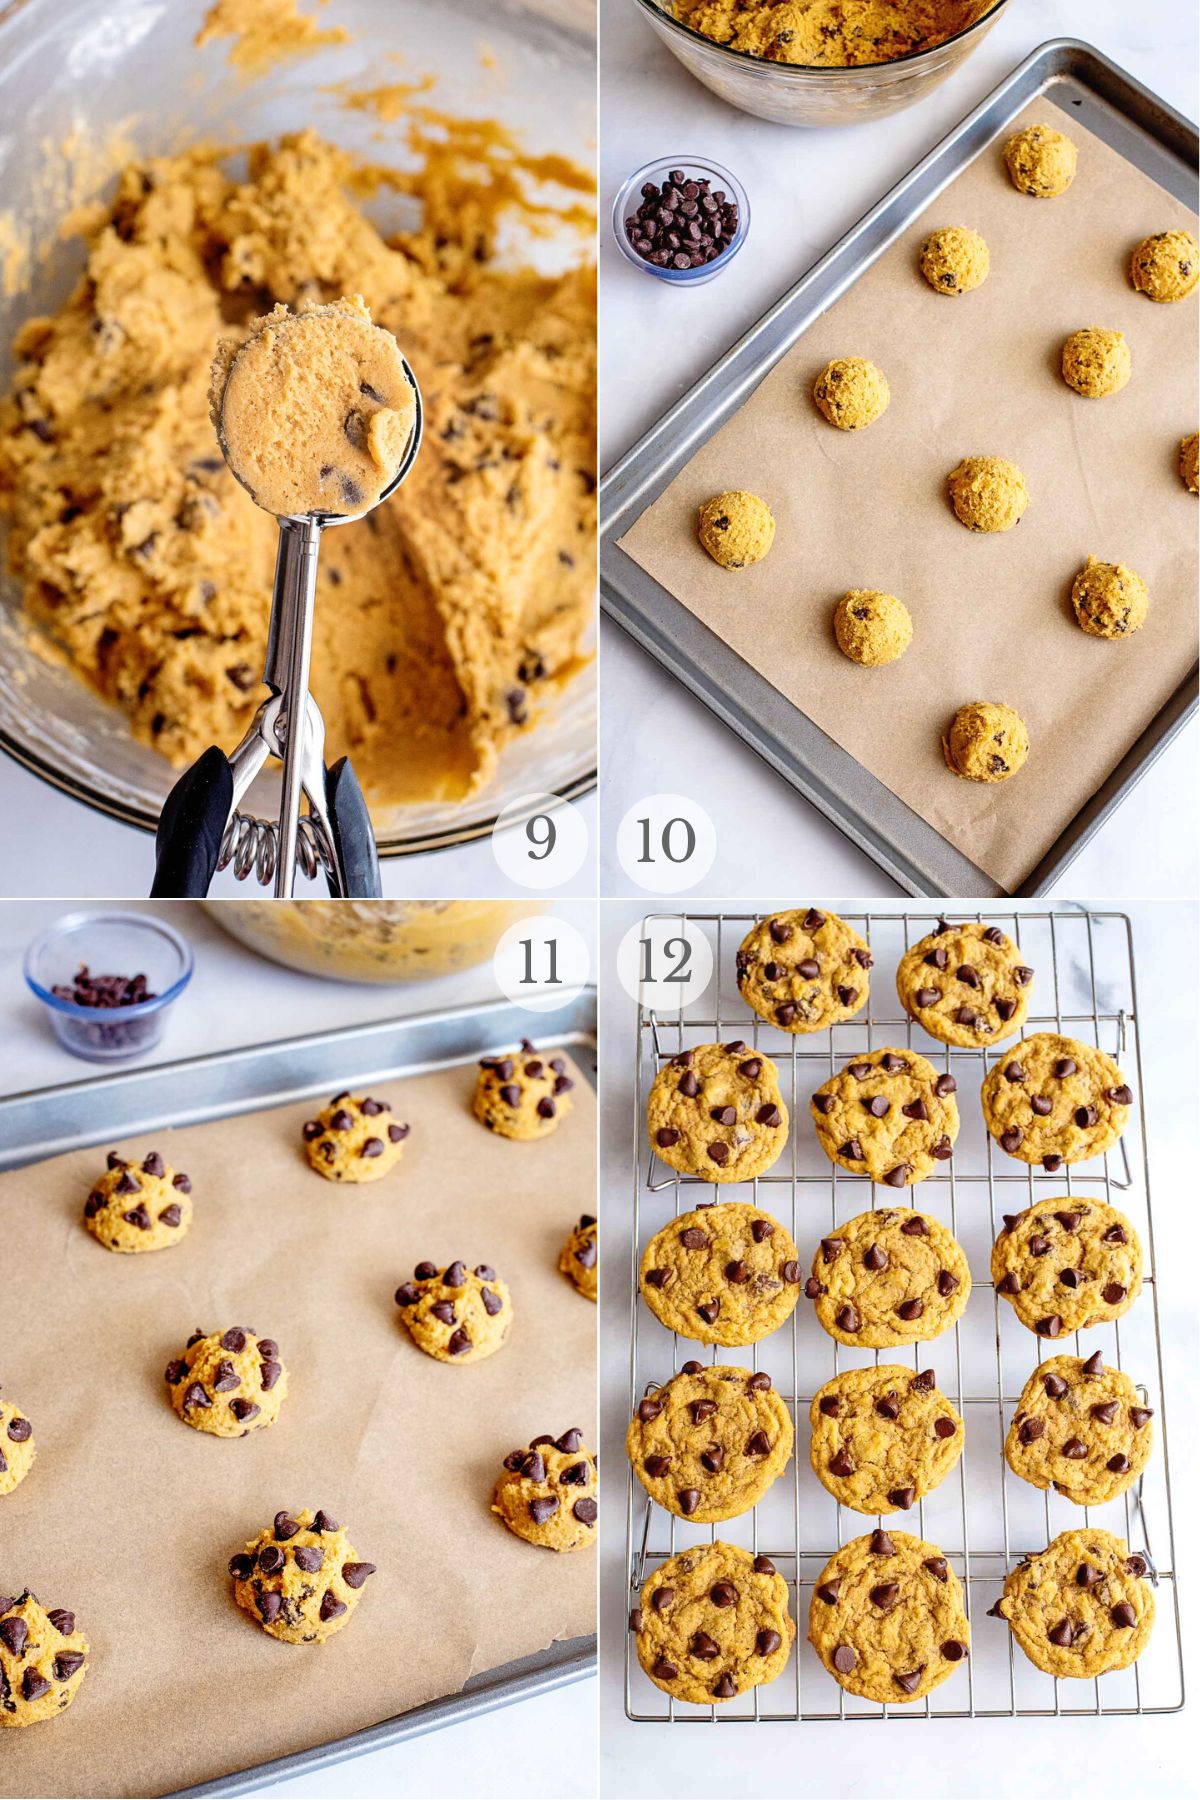 pumpkin chocolate chip cookies recipe steps 9-12